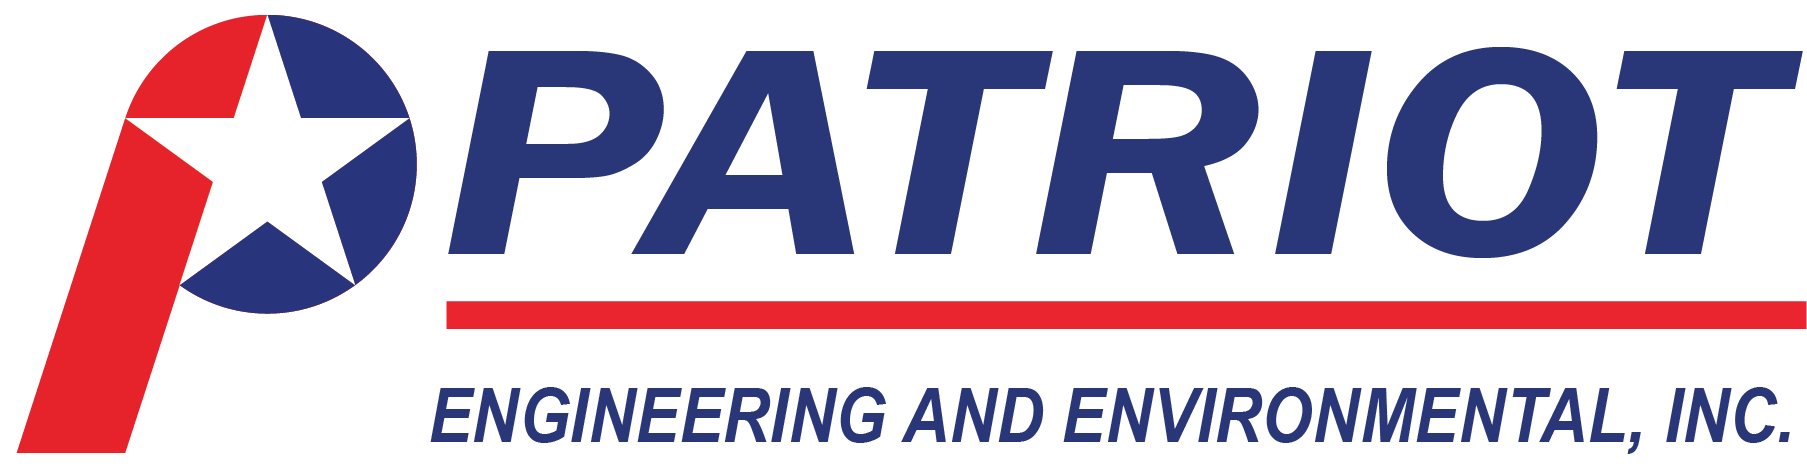 Patriot Engineering and Environmental, Inc. Logo